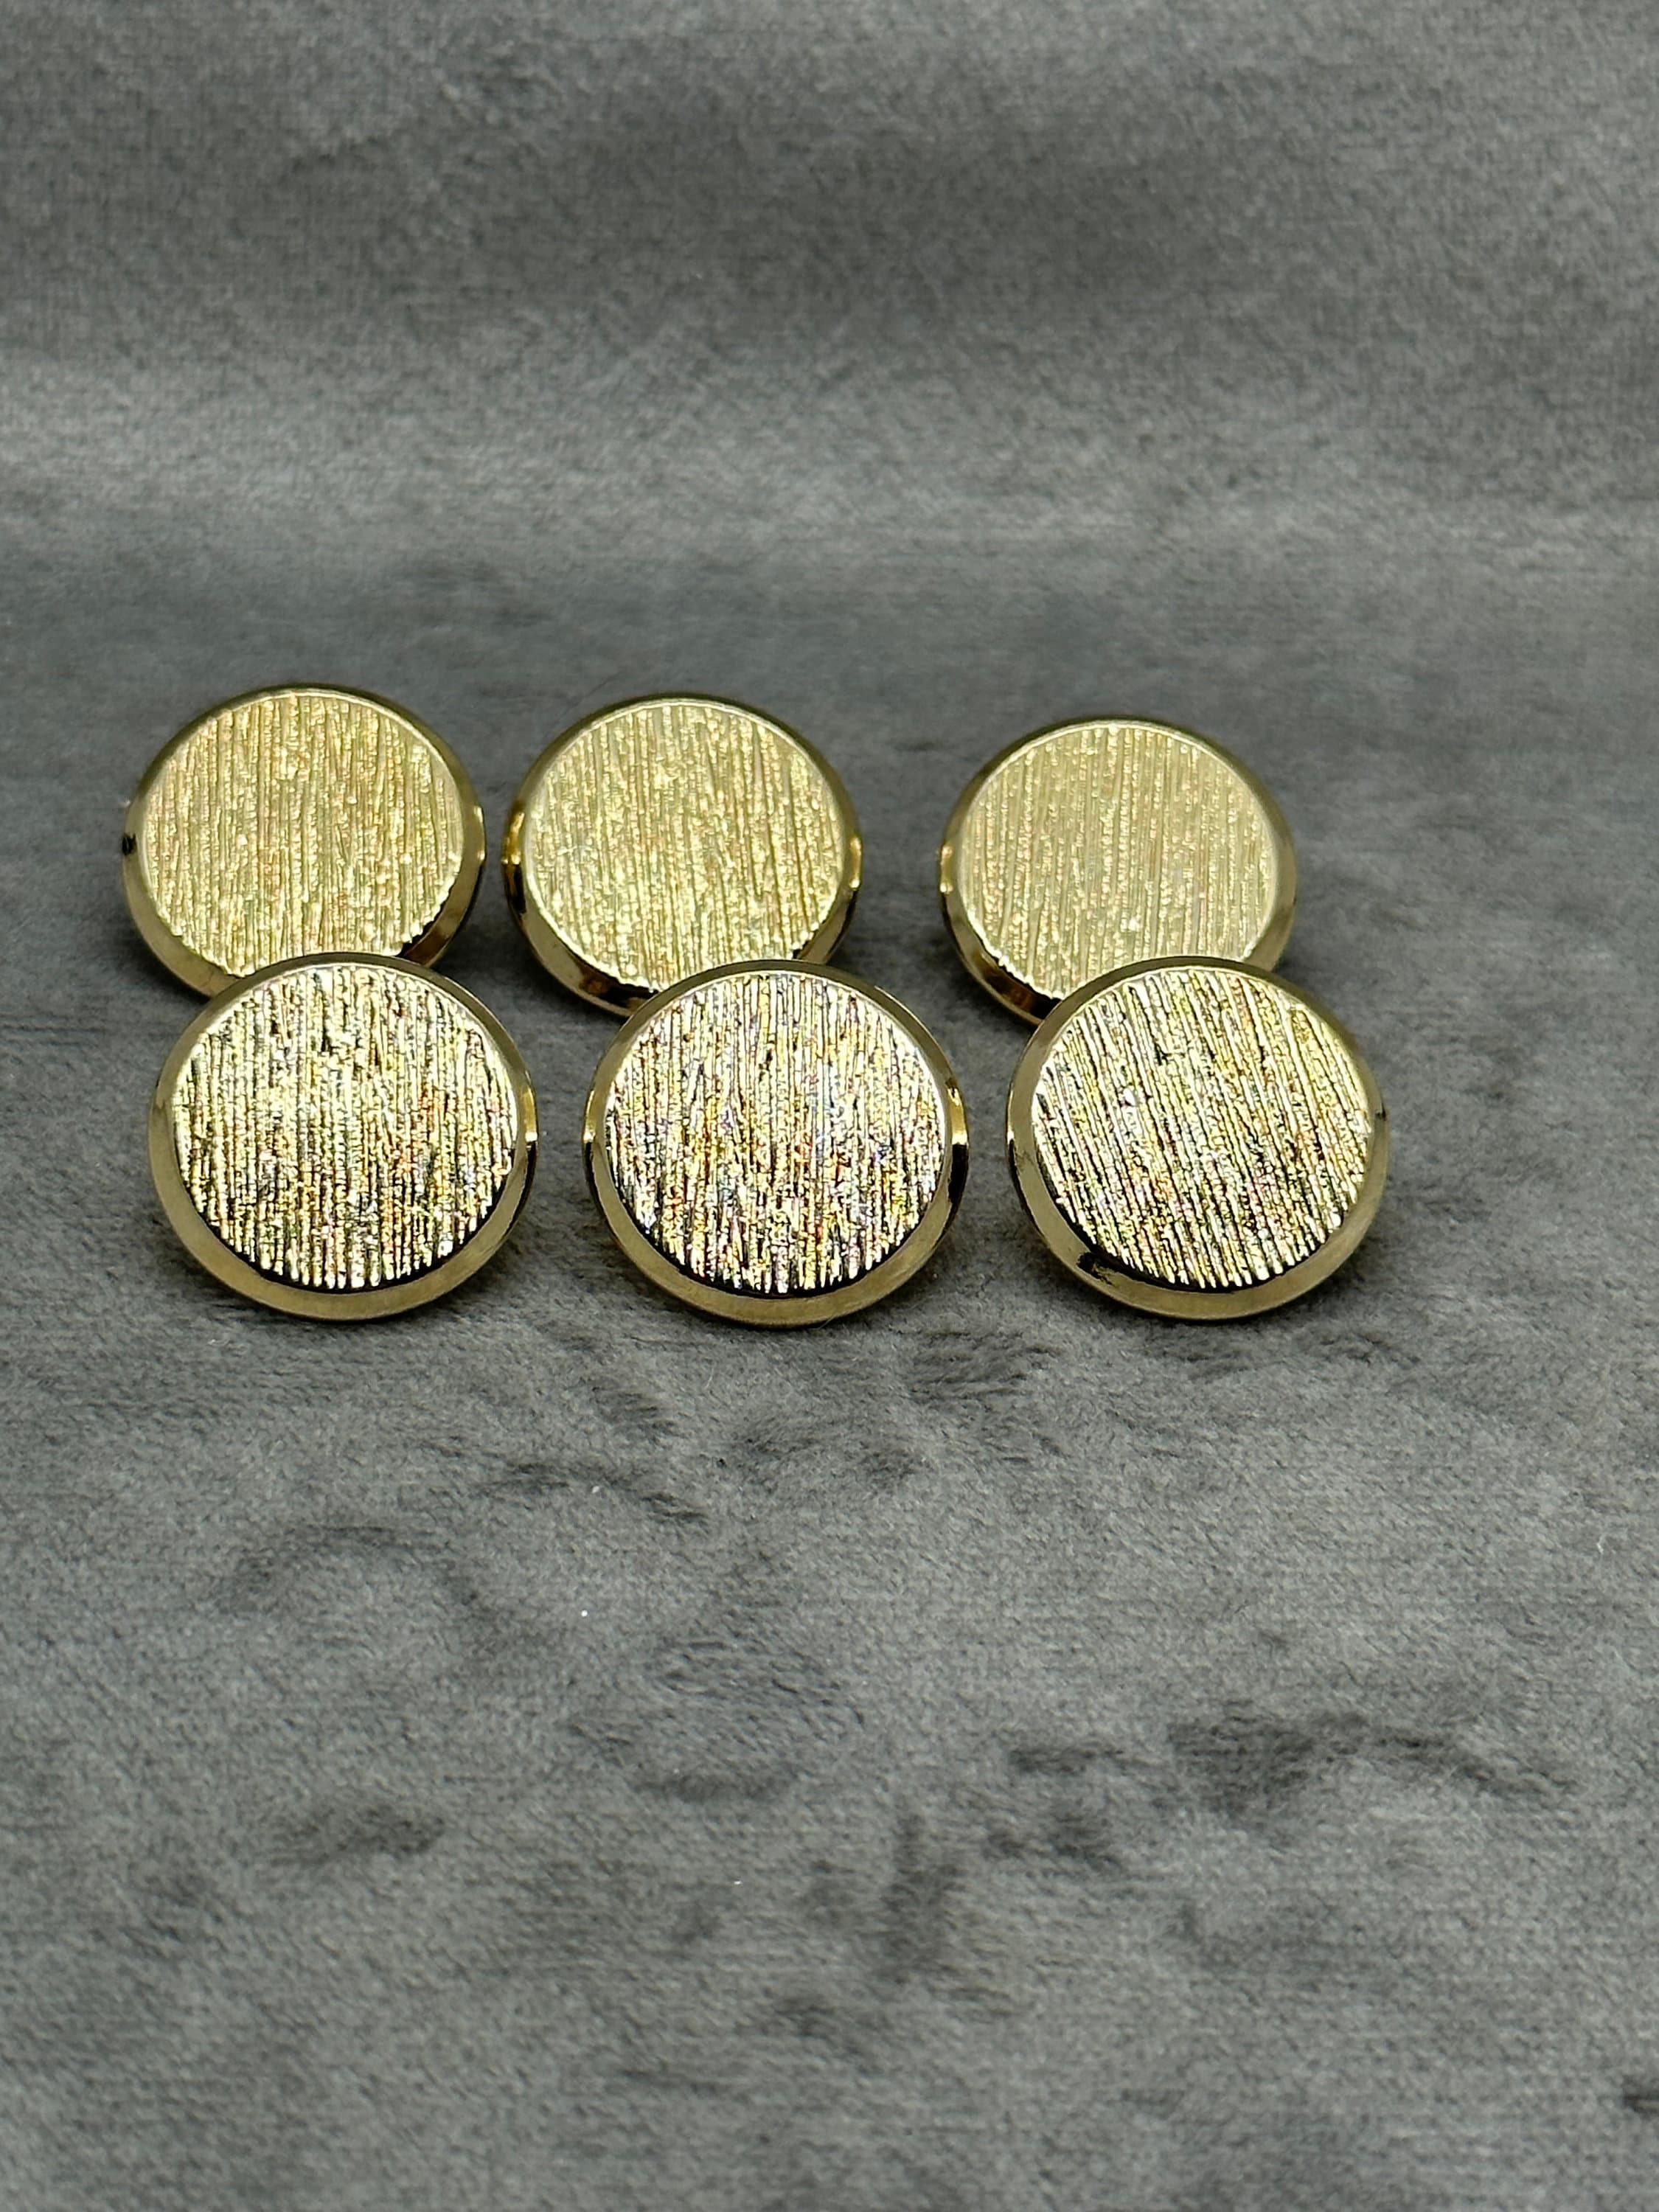 Blazer buttons gold tone metal shield design 24mm a set of 6